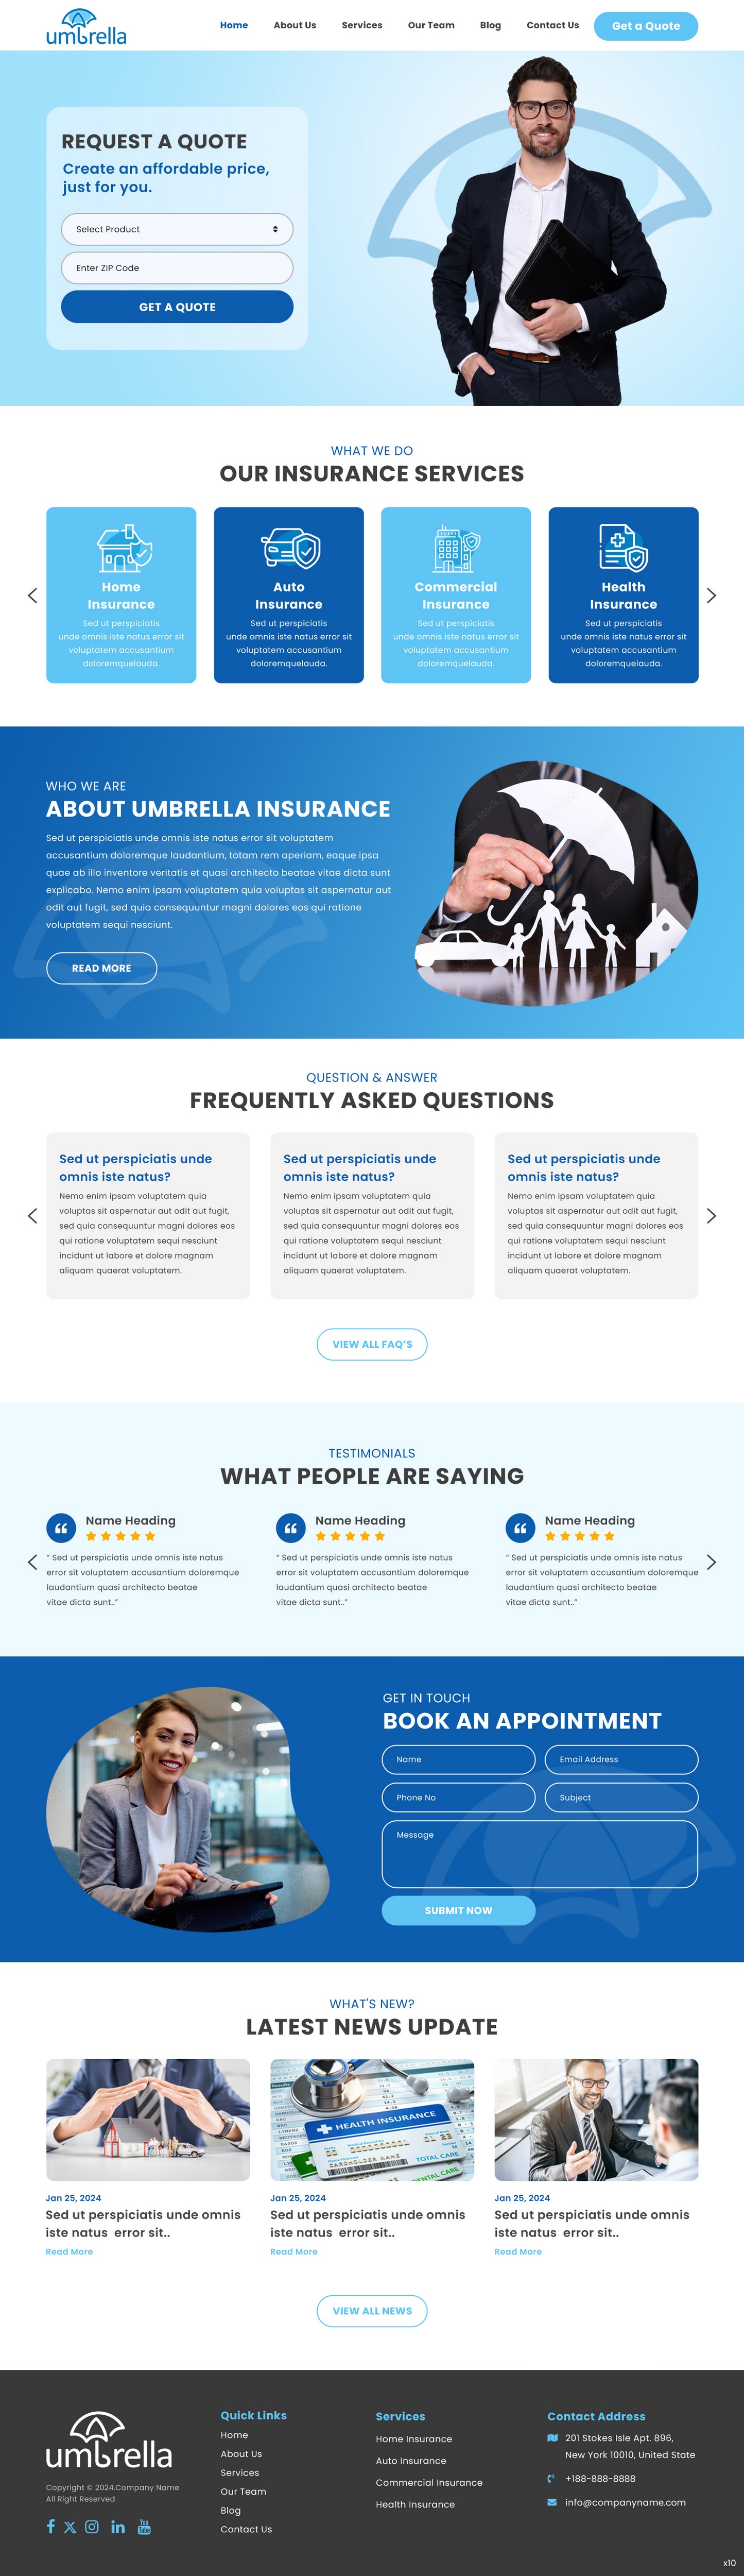 Insurance website design example